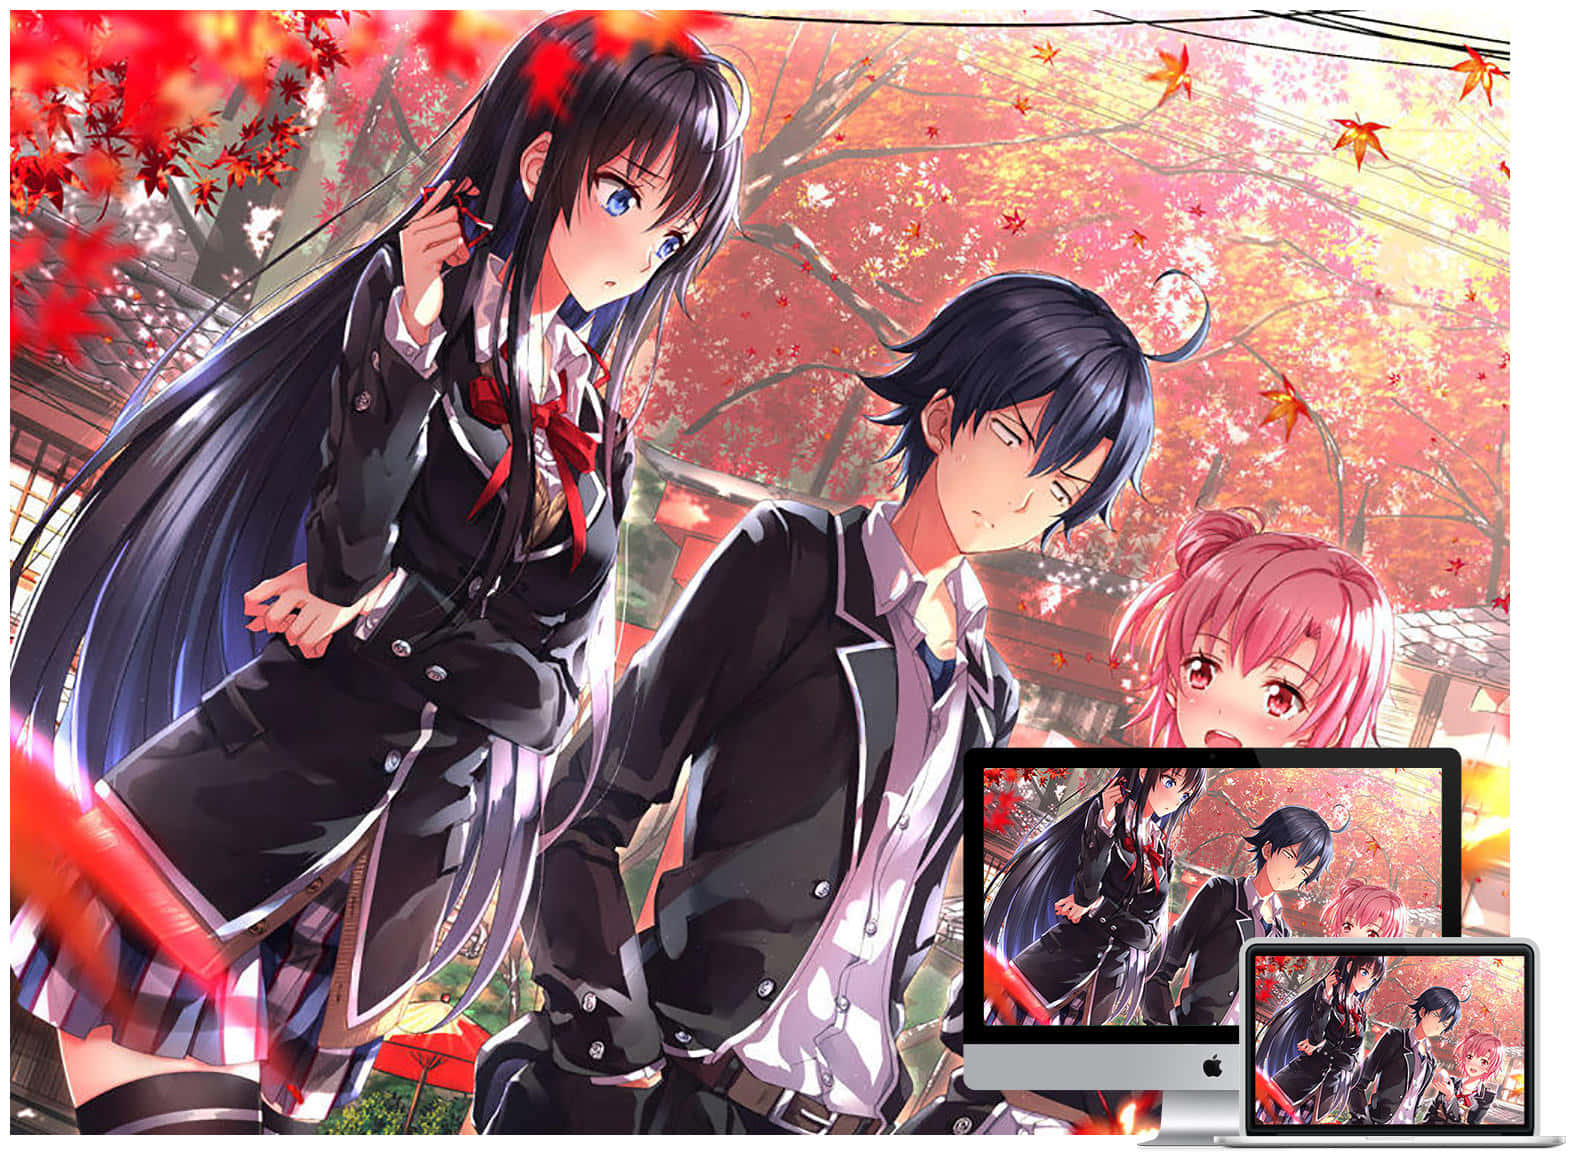 Download Best Anime Oregairu Japanese Anime Series Wallpaper | Wallpapers .com